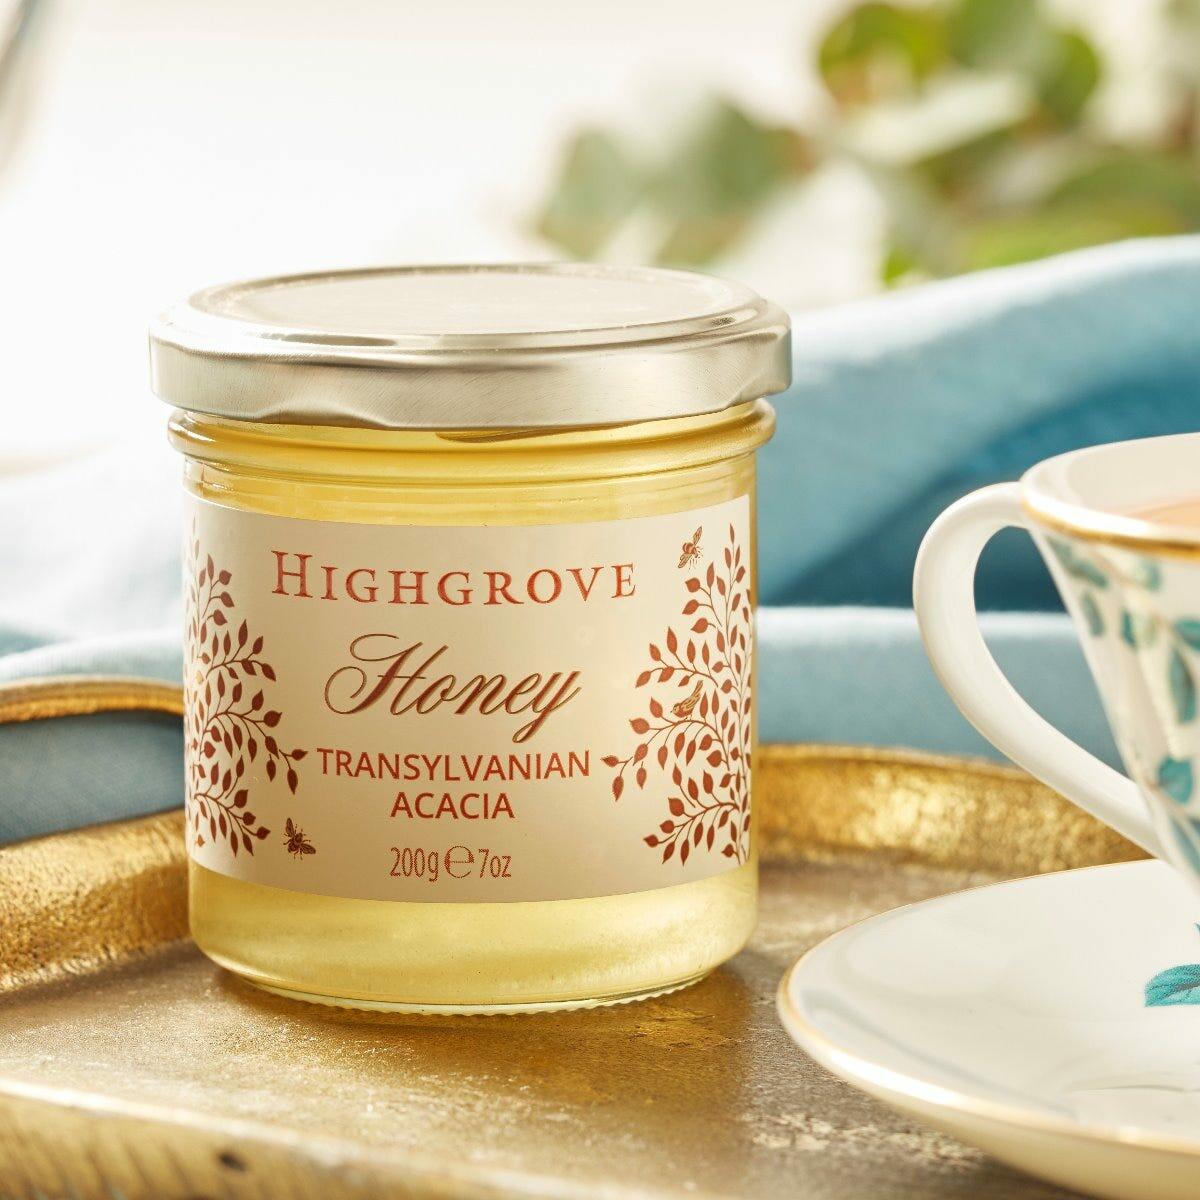 Fortnum & Mason Highgrove Transylvanian Acacia Honey